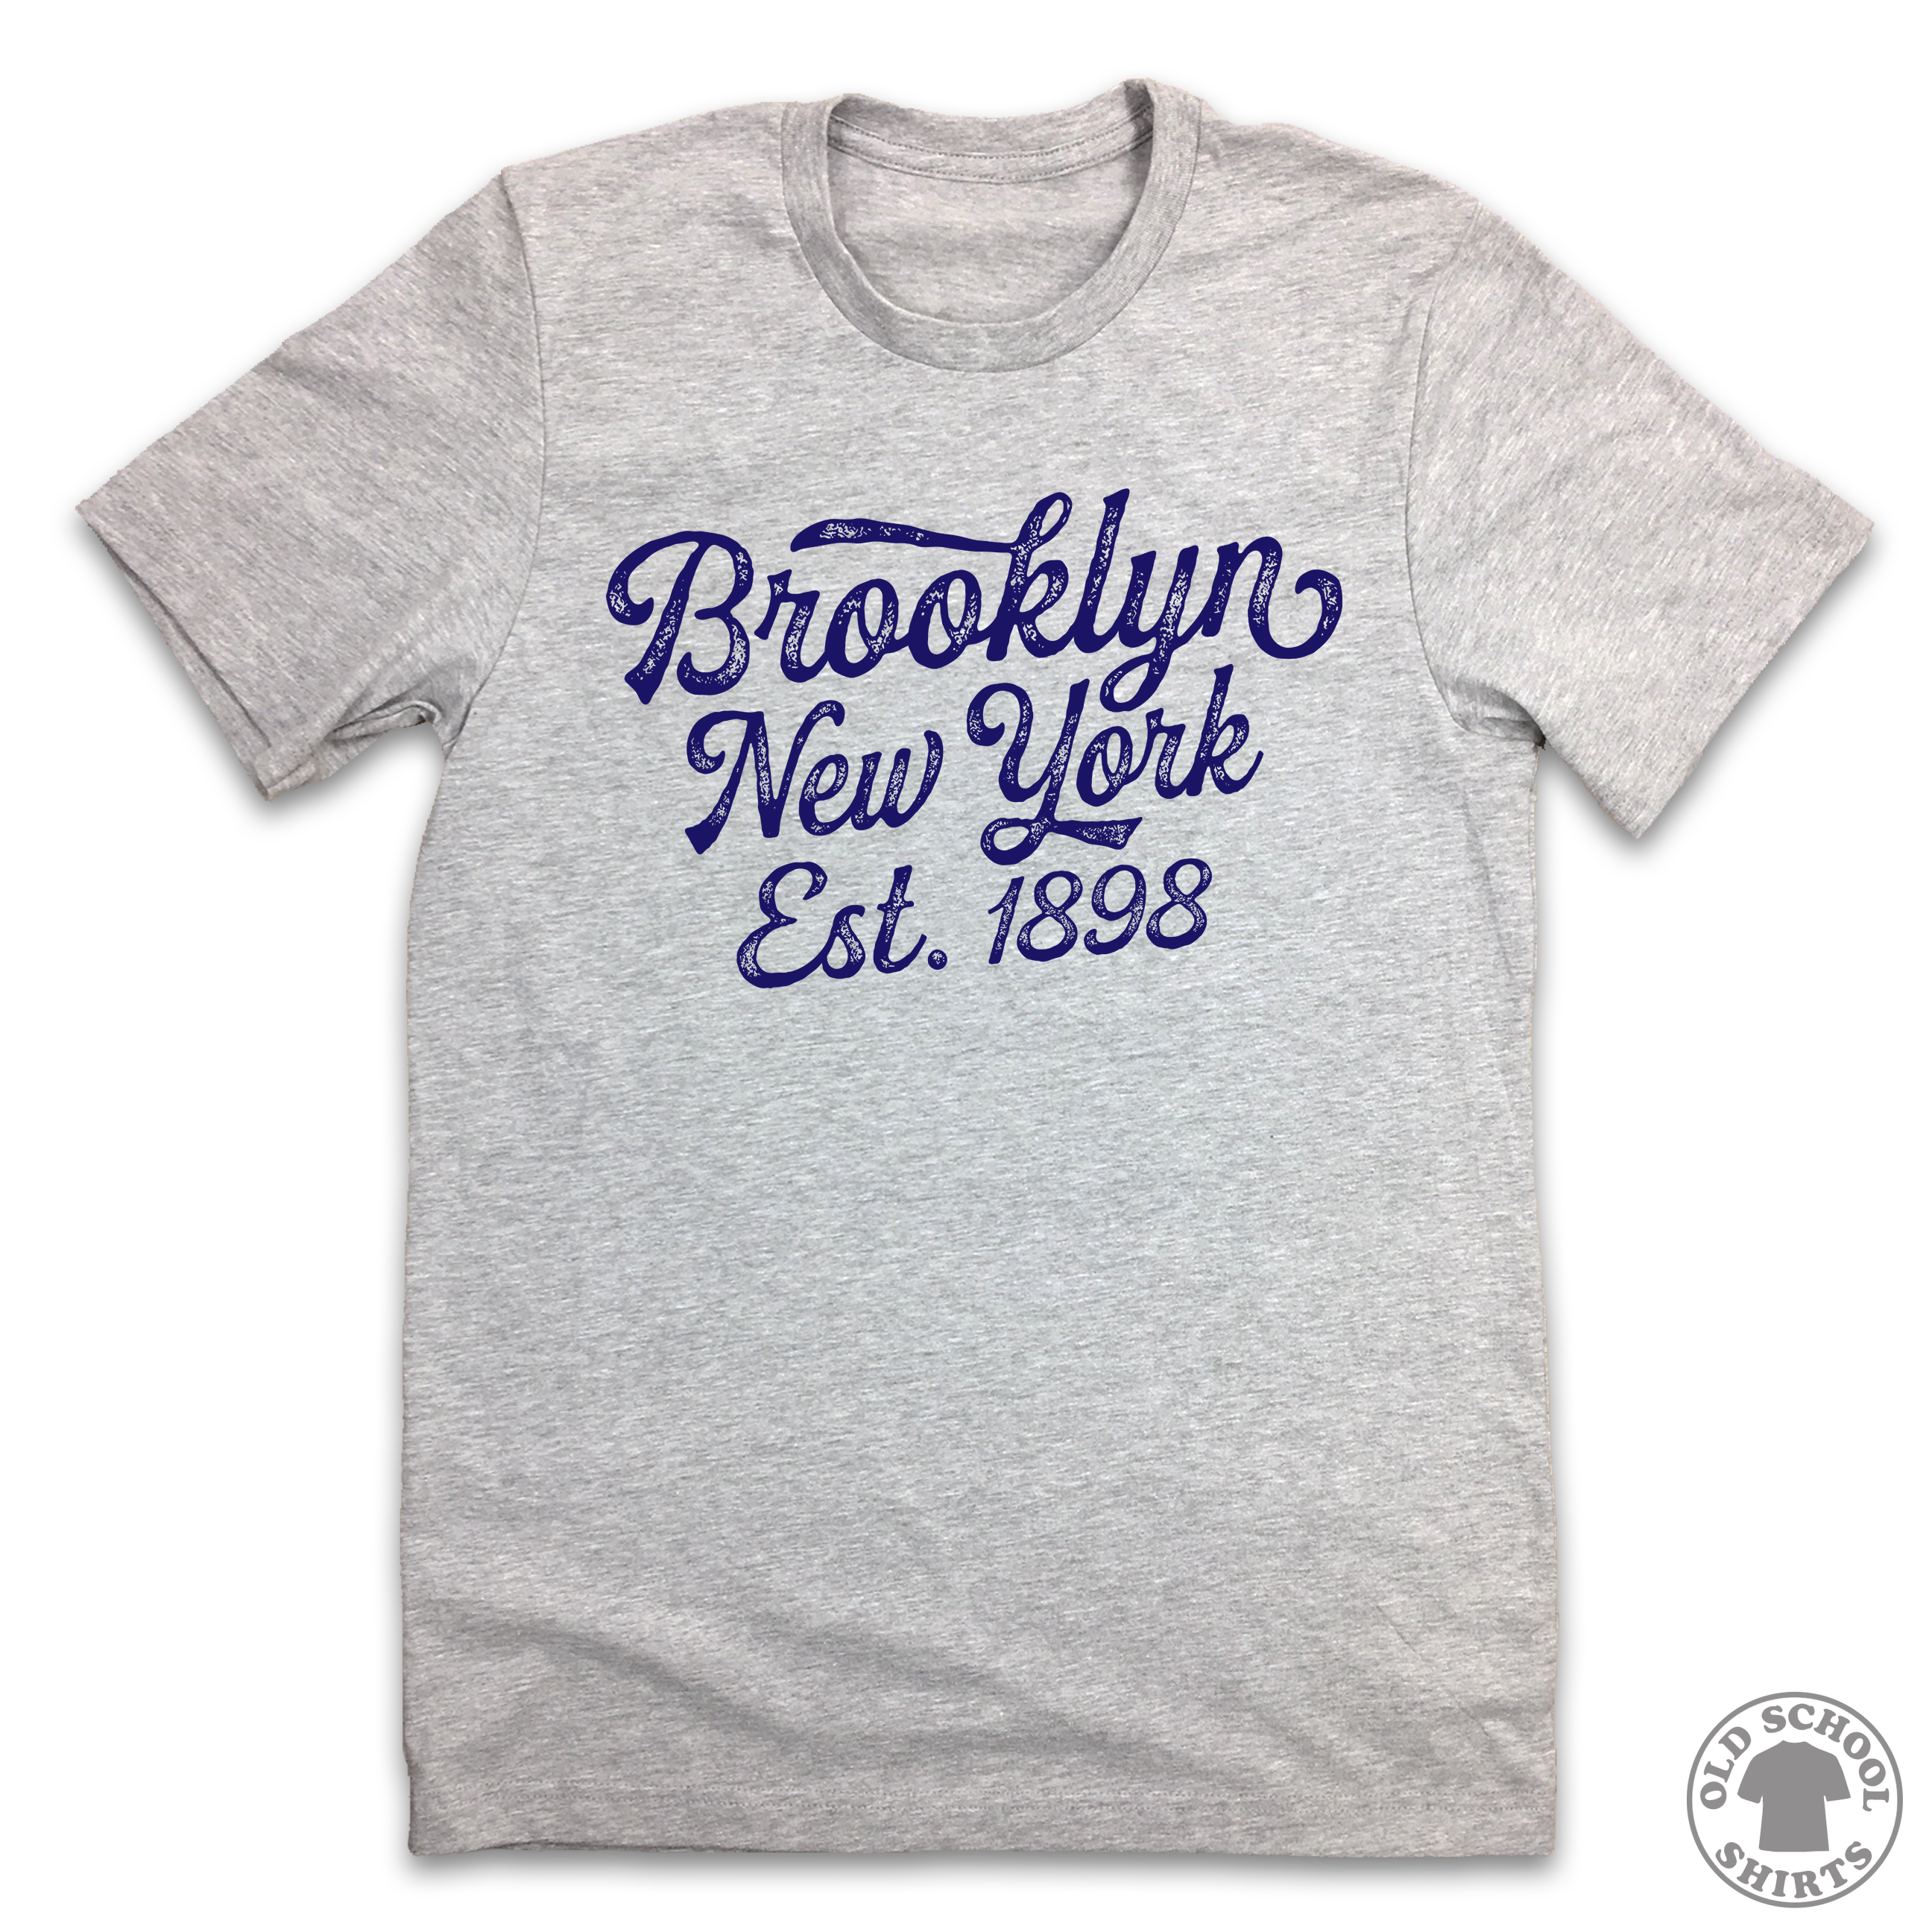 Brooklyn New York Est. 1898 - Old School Shirts- Retro Sports T Shirts